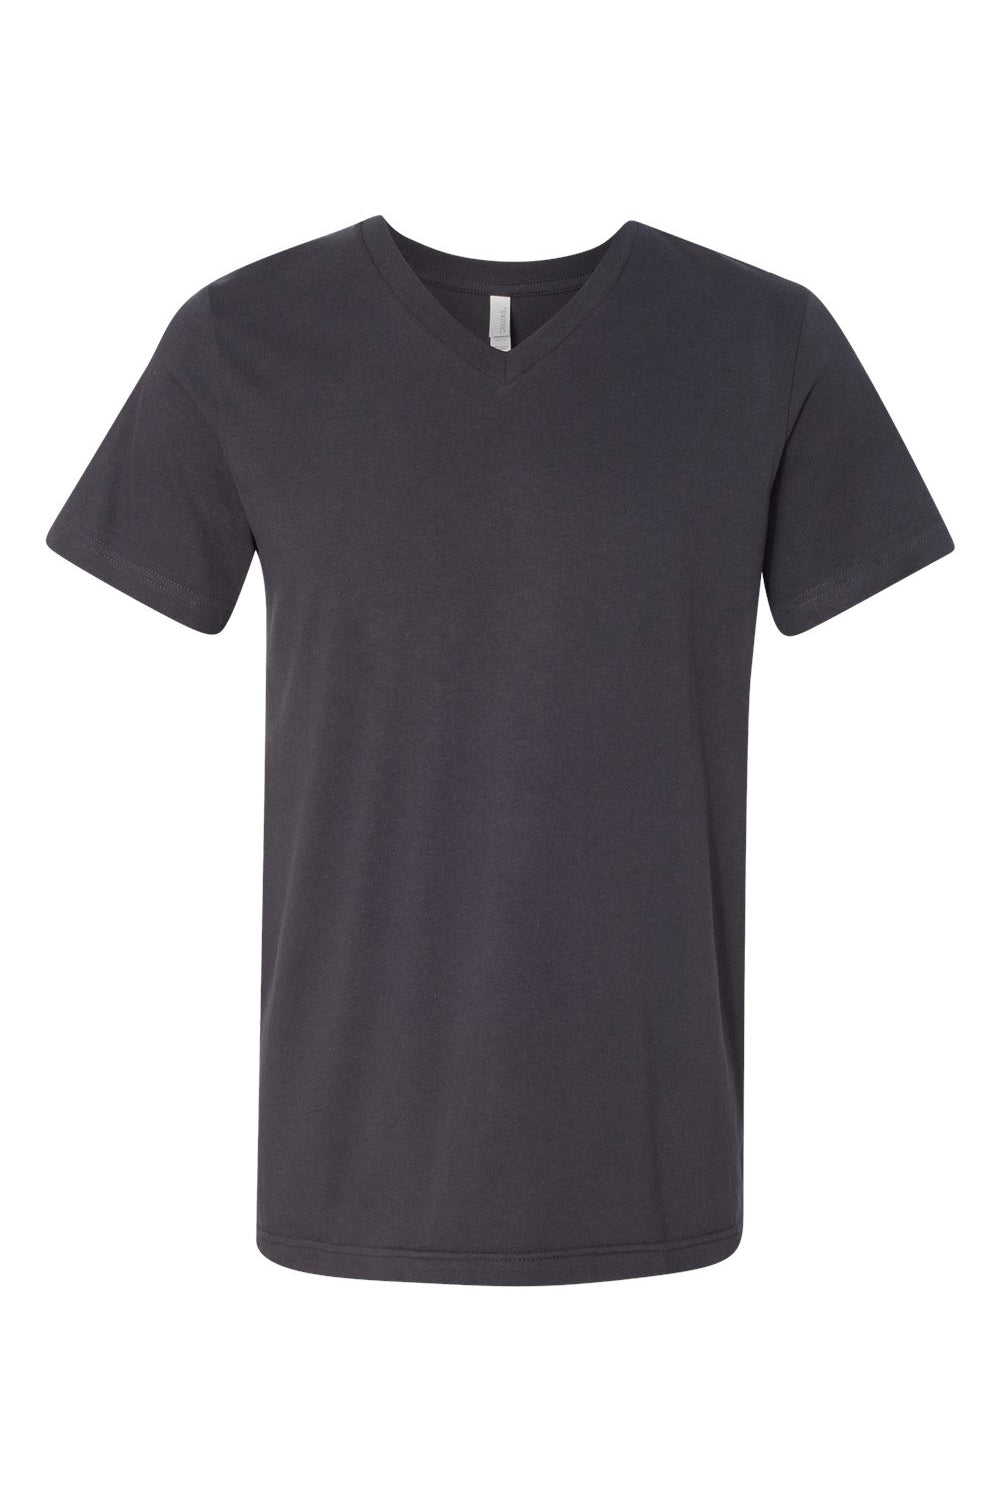 Bella + Canvas BC3005/3005/3655C Mens Jersey Short Sleeve V-Neck T-Shirt Dark Grey Flat Front